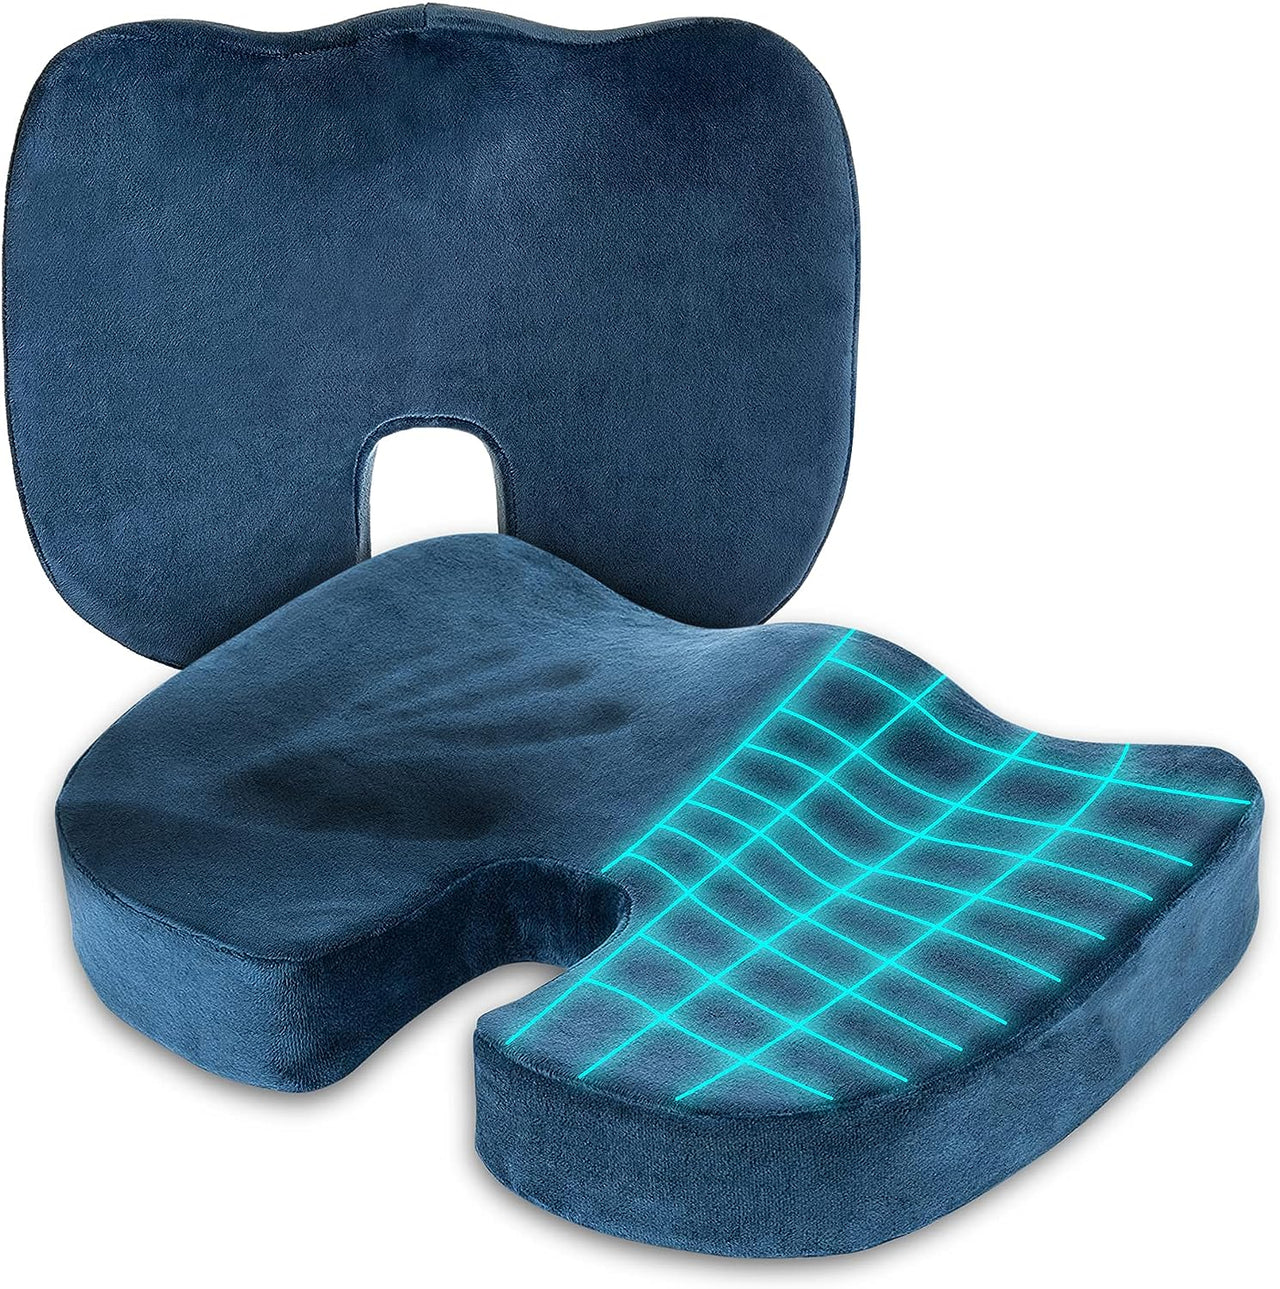 Orthopedic Coccyx Seat Cushion with Memory Foam